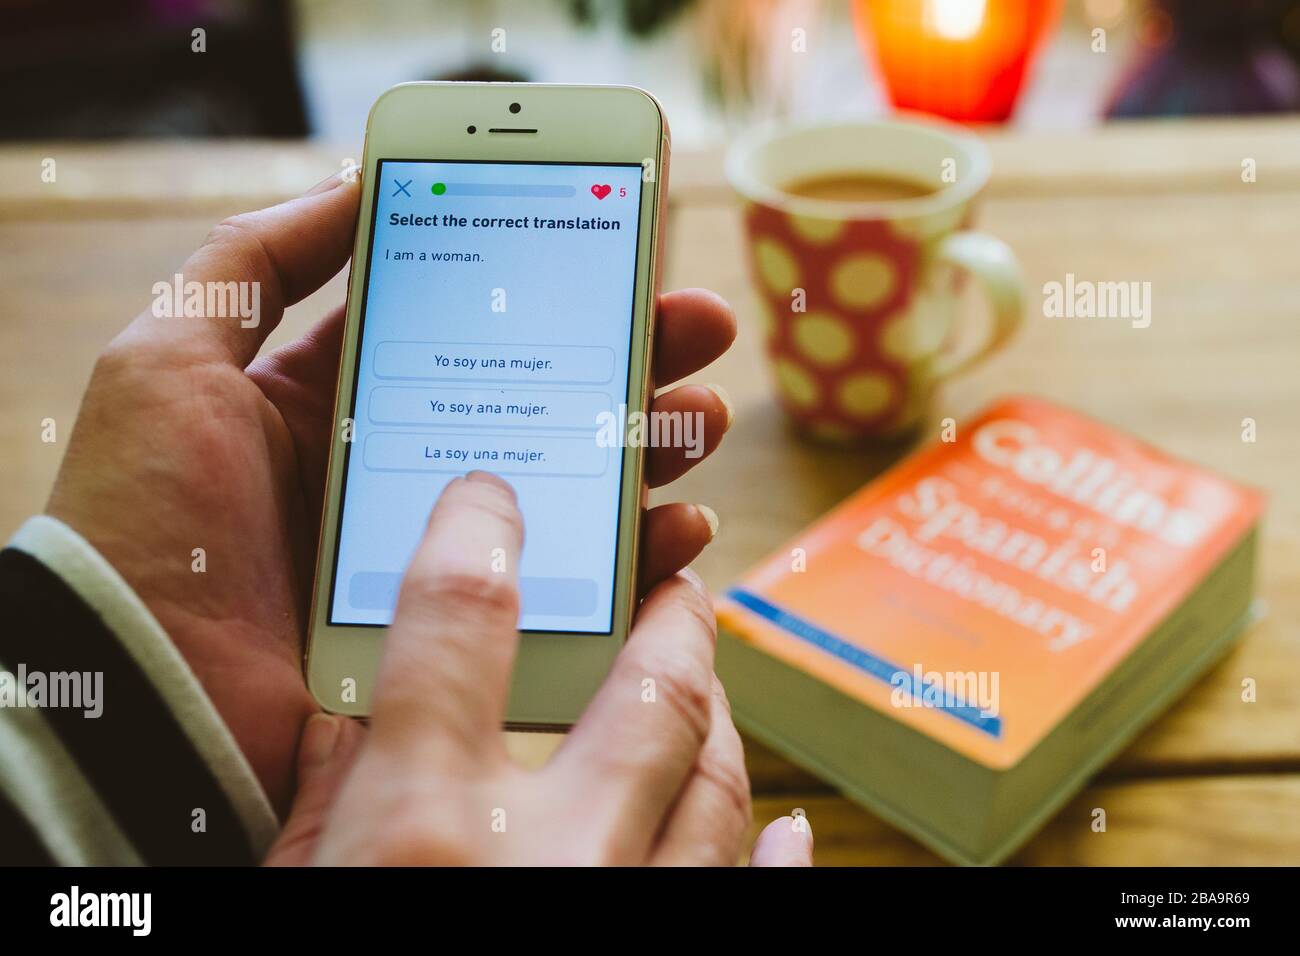 Coronavirus lockdown UK self isolation at home learning a new language with Duolingo app Stock Photo